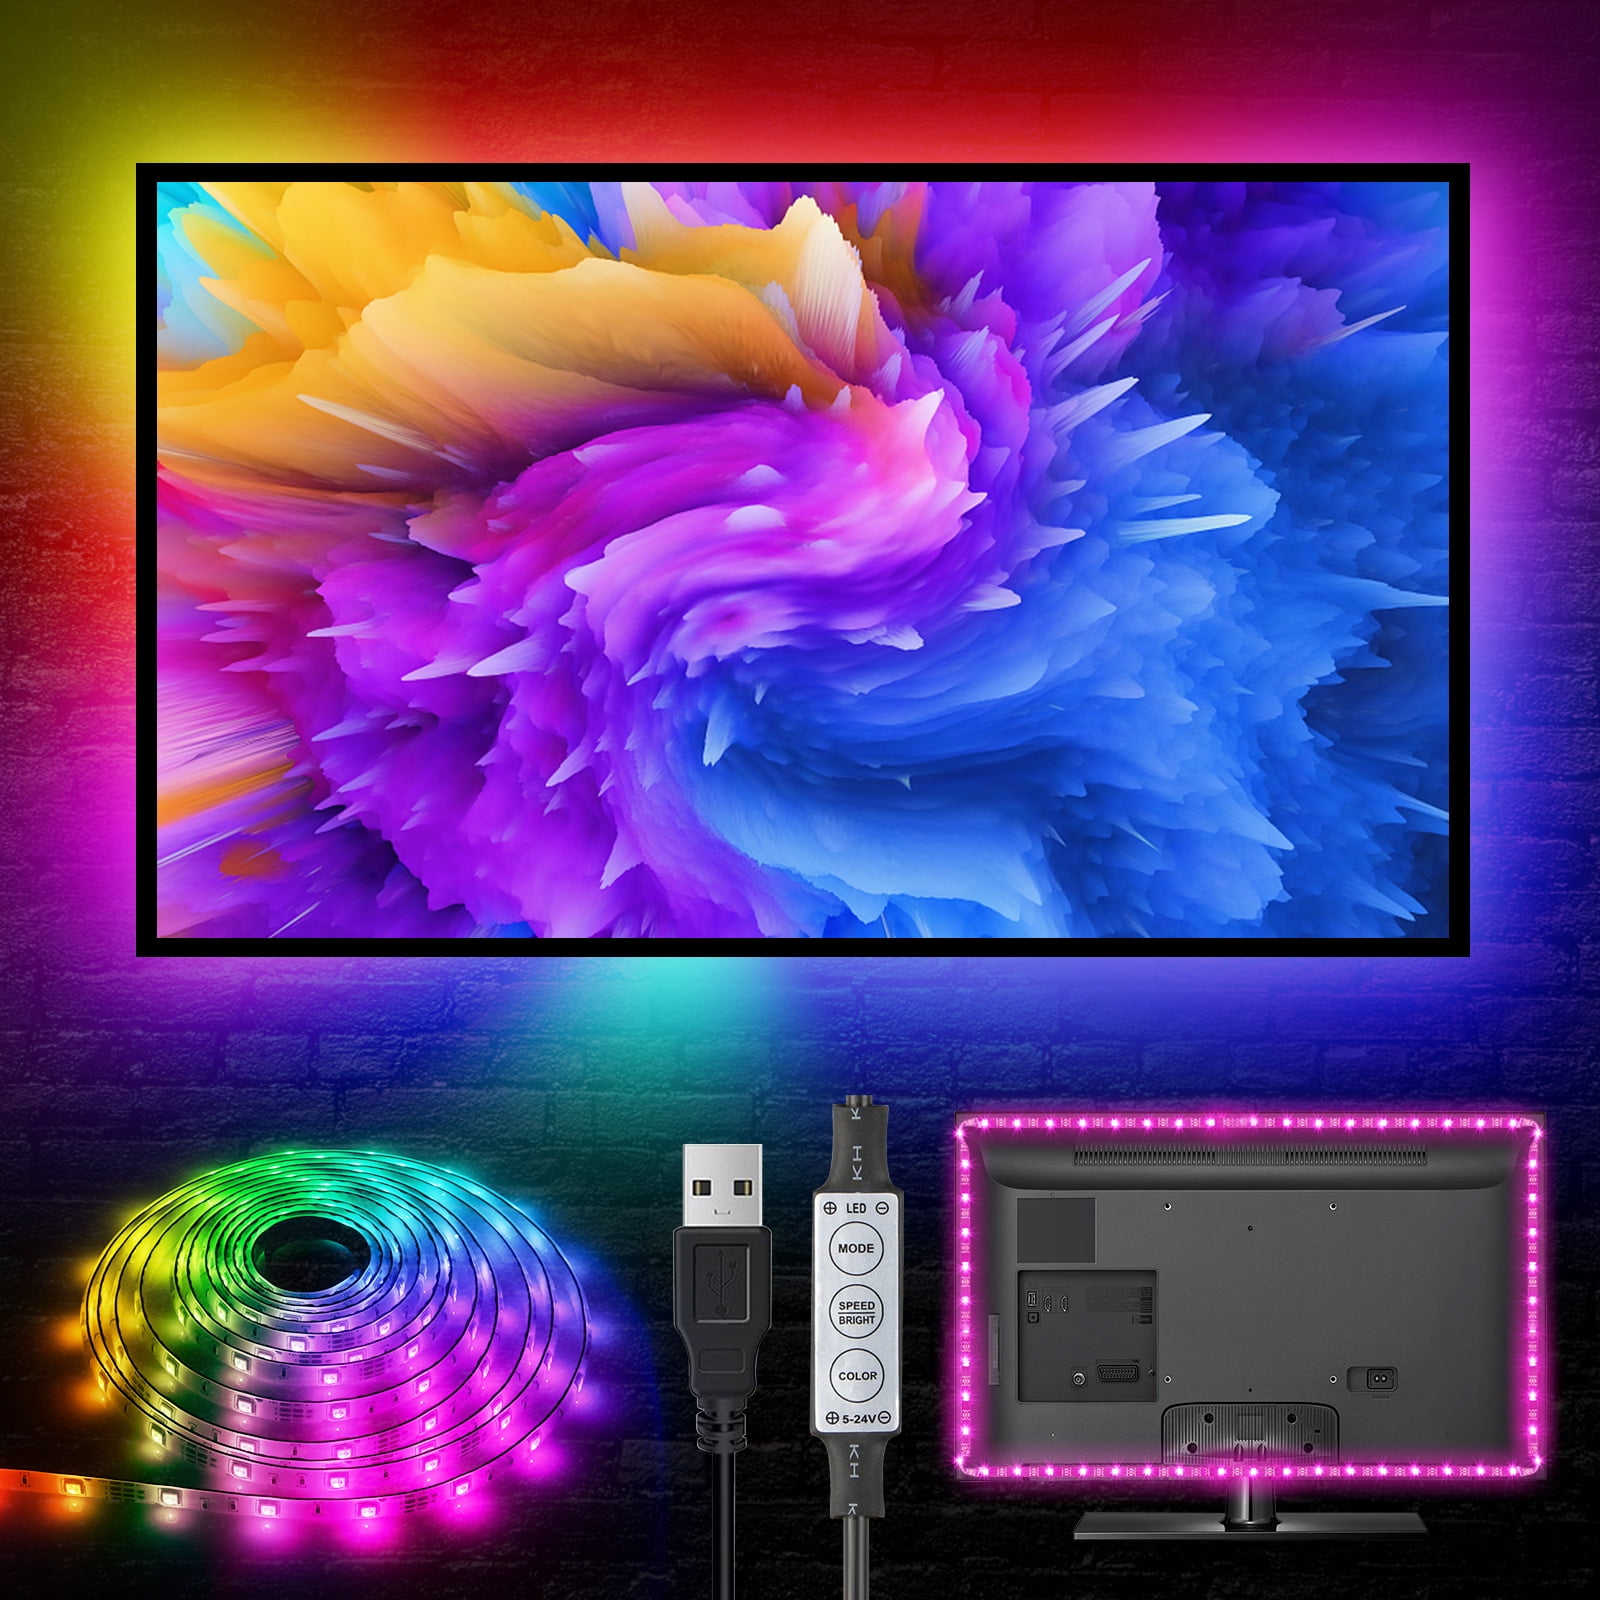 LED TV Backlight Bias Lighting Kits for HDTV USB Powered RGB Remote Control 